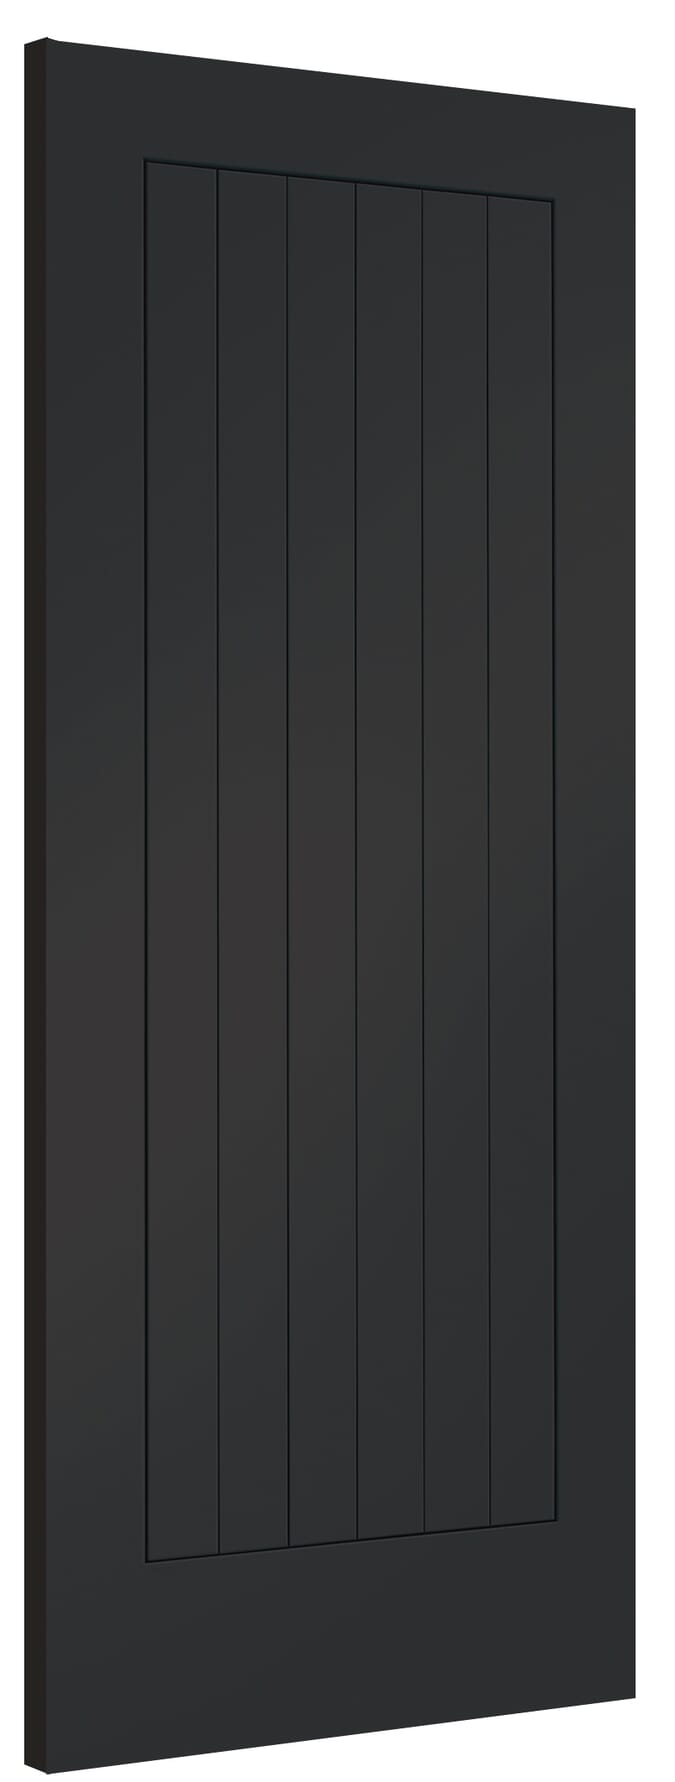 626x2040x40mm Suffolk Cosmos Black Internal Doors